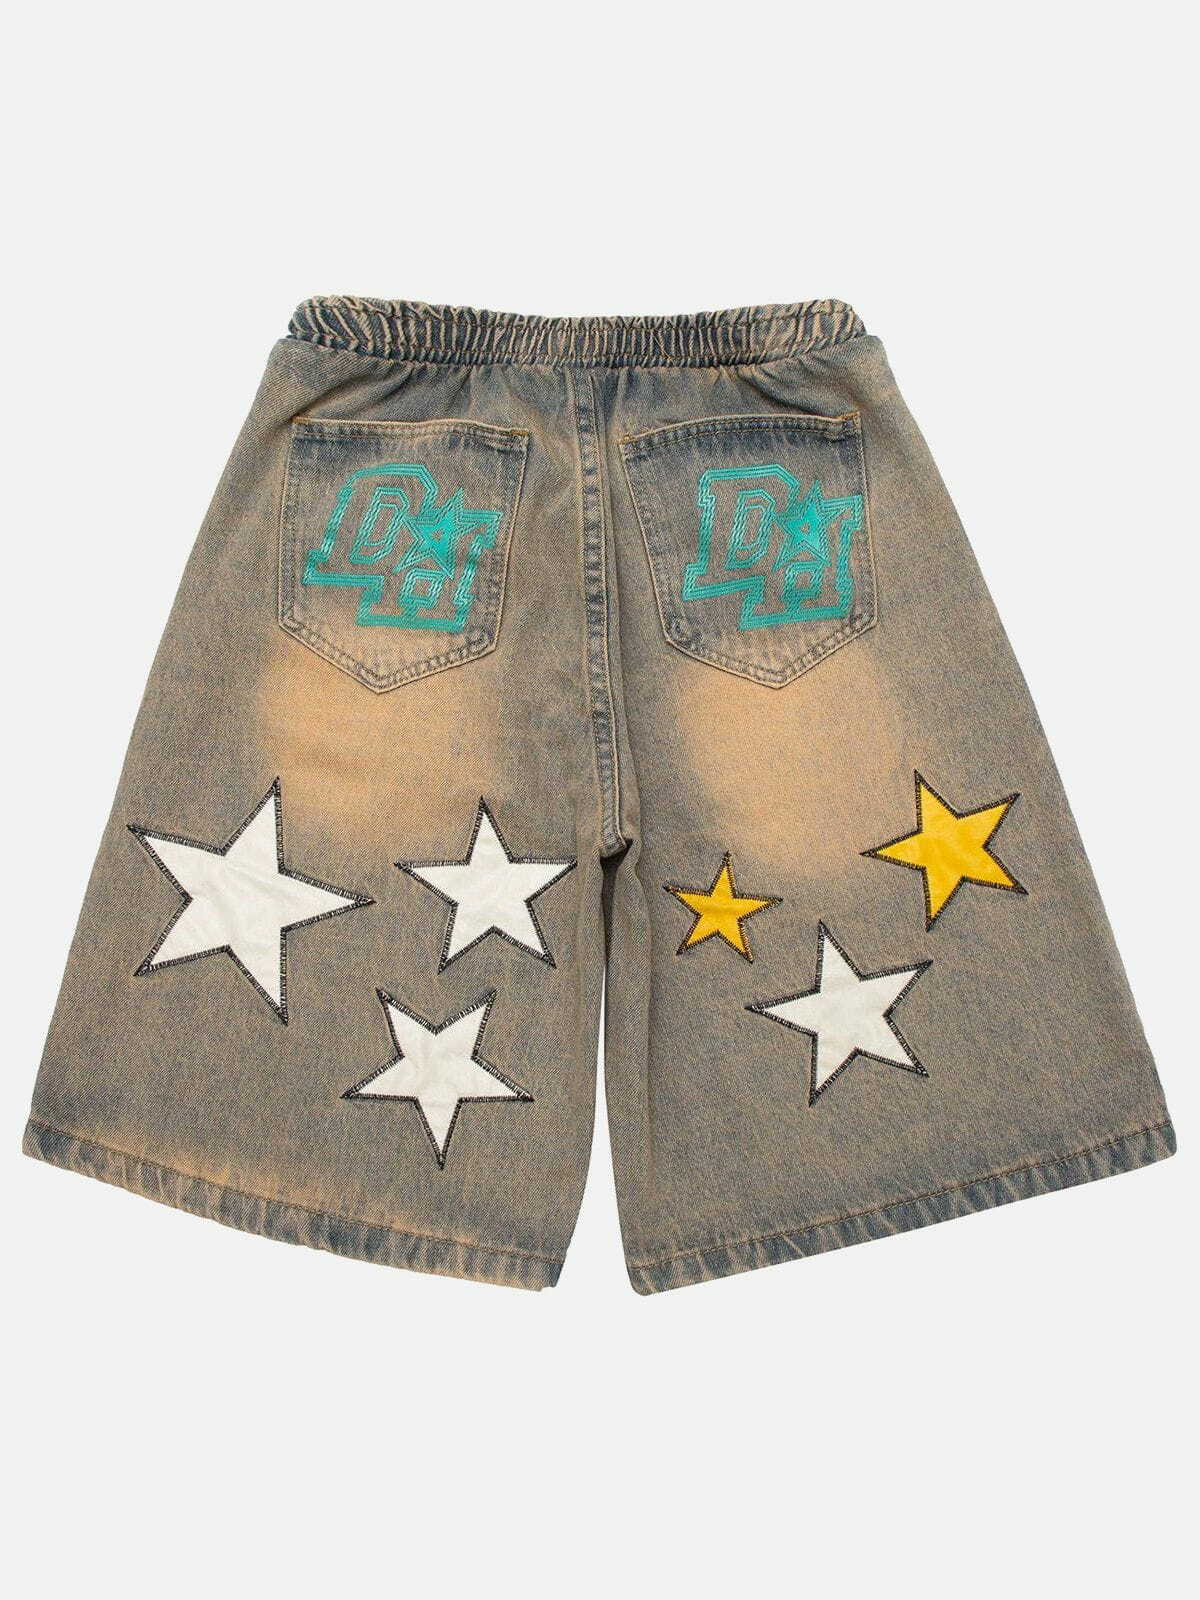 retro stars shorts chic and vibrant y2k fashion 6673